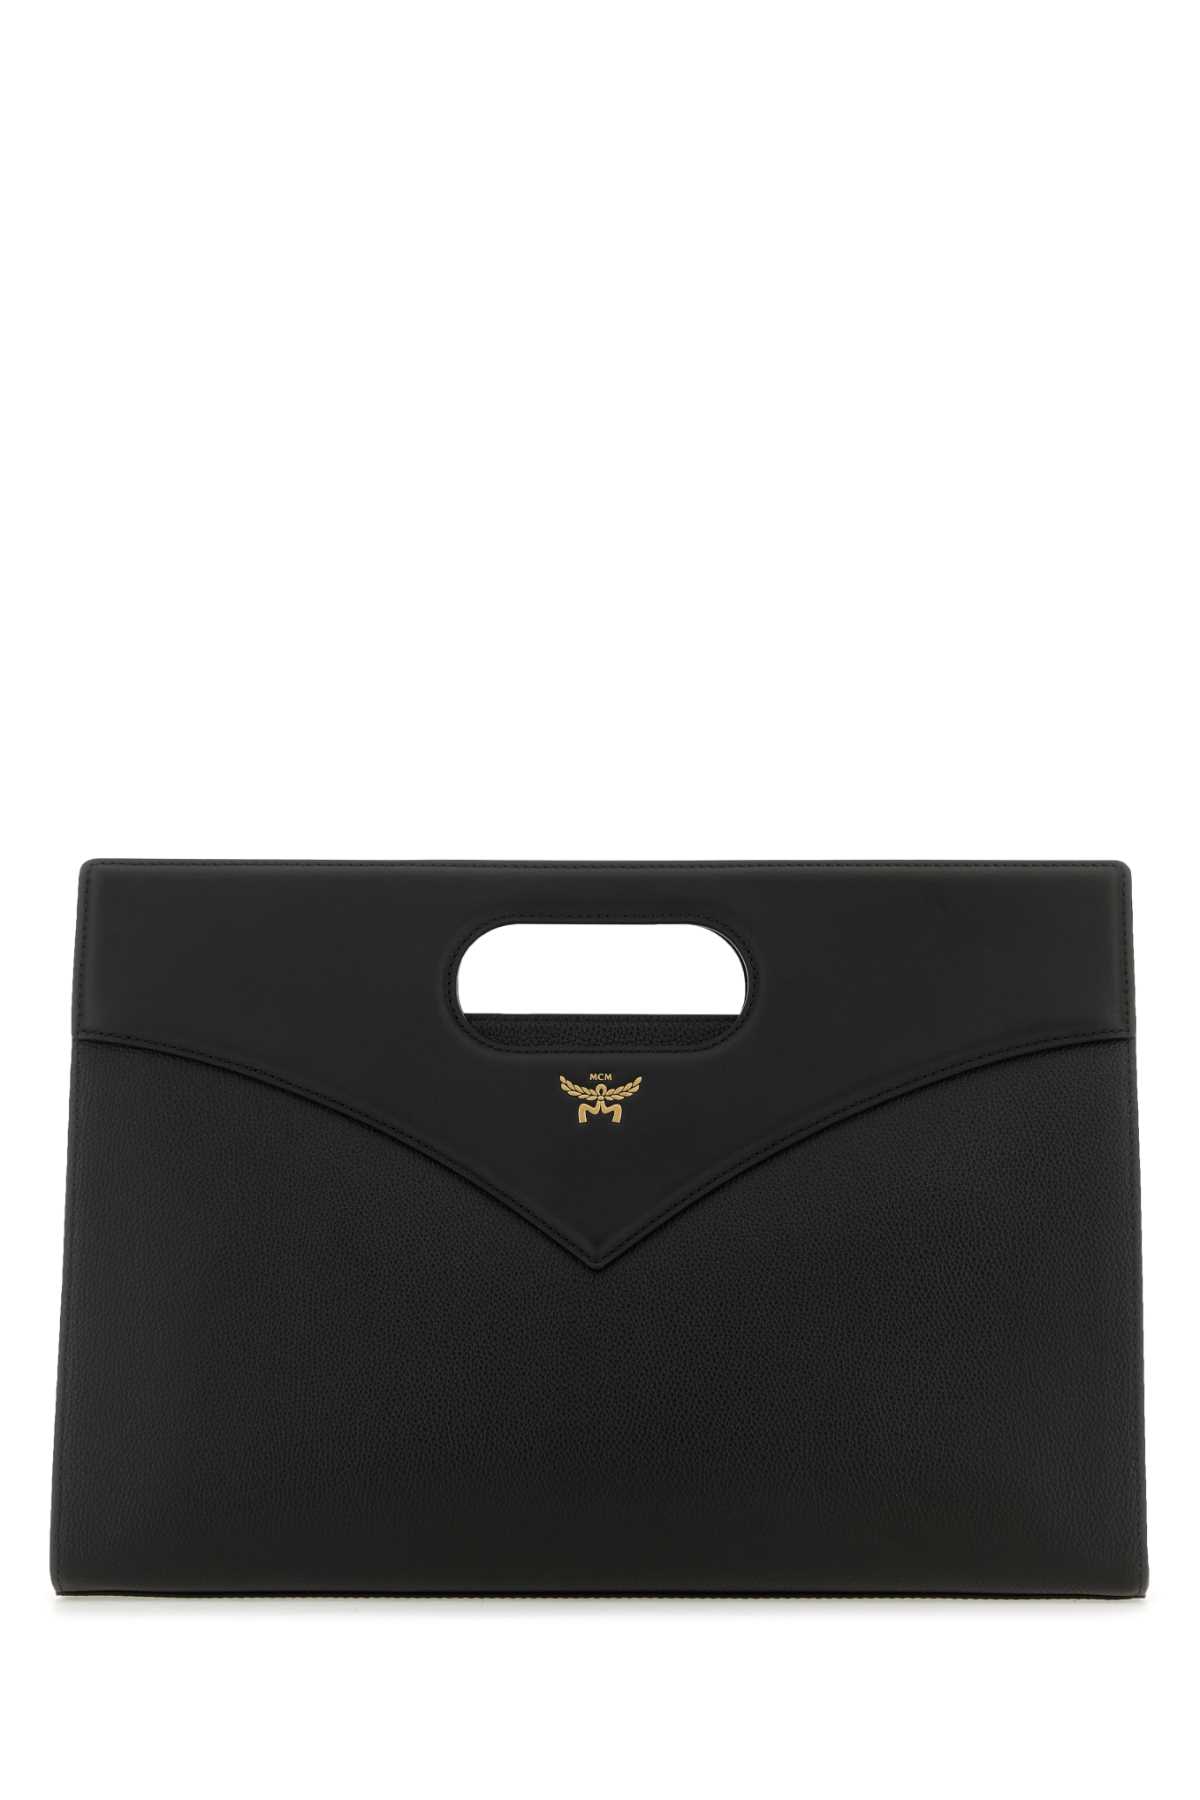 Black Leather Diamond Handbag